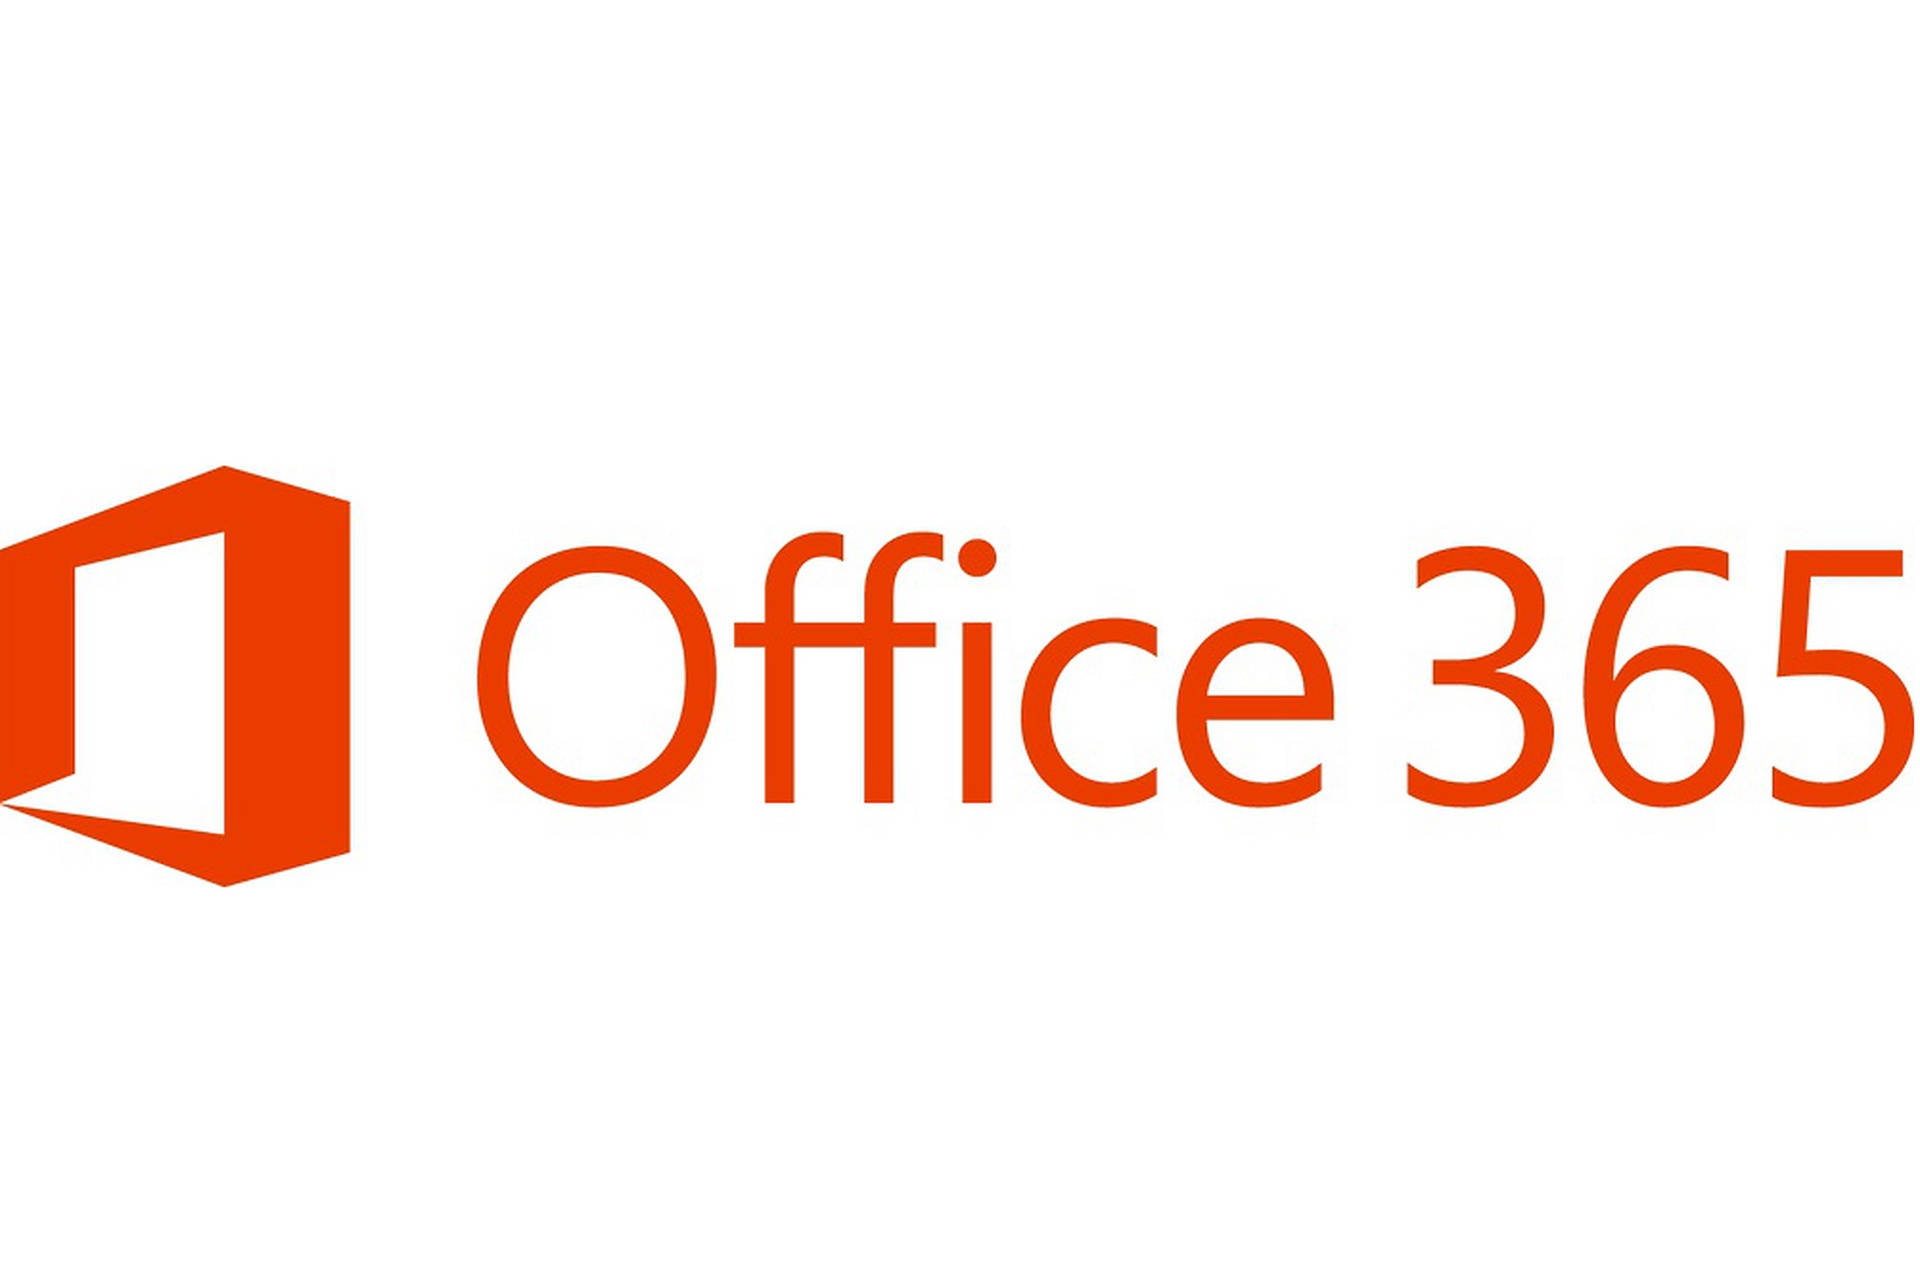 Office 365 Orange Logo Wallpaper